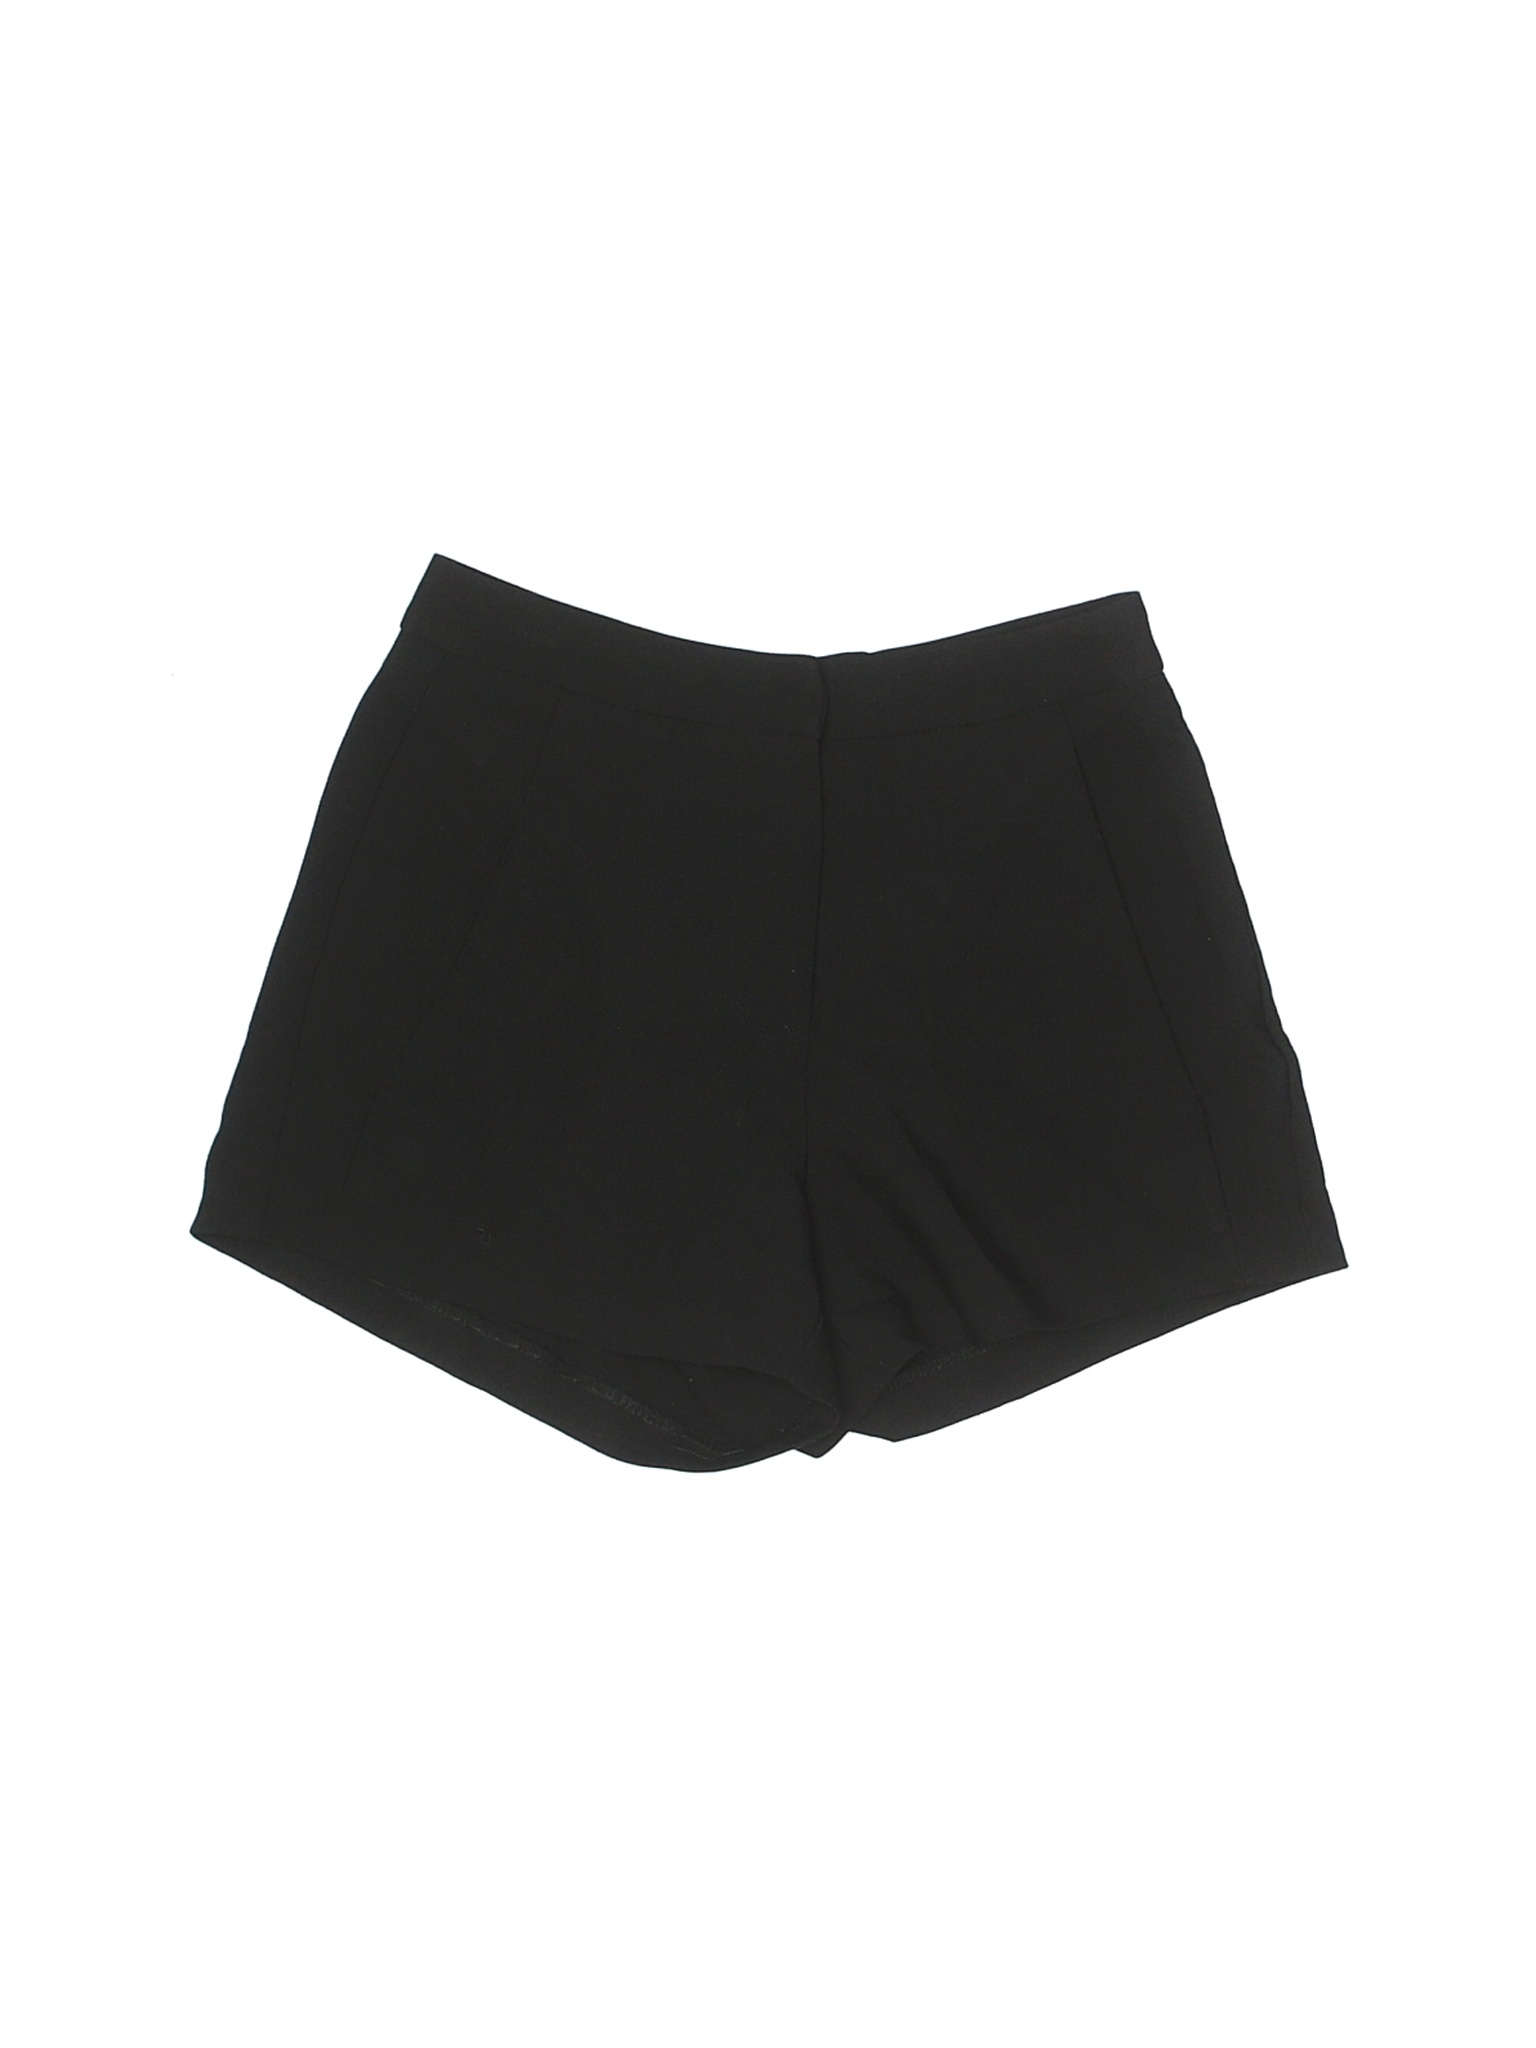 Bishop + Young Women Black Shorts XS | eBay